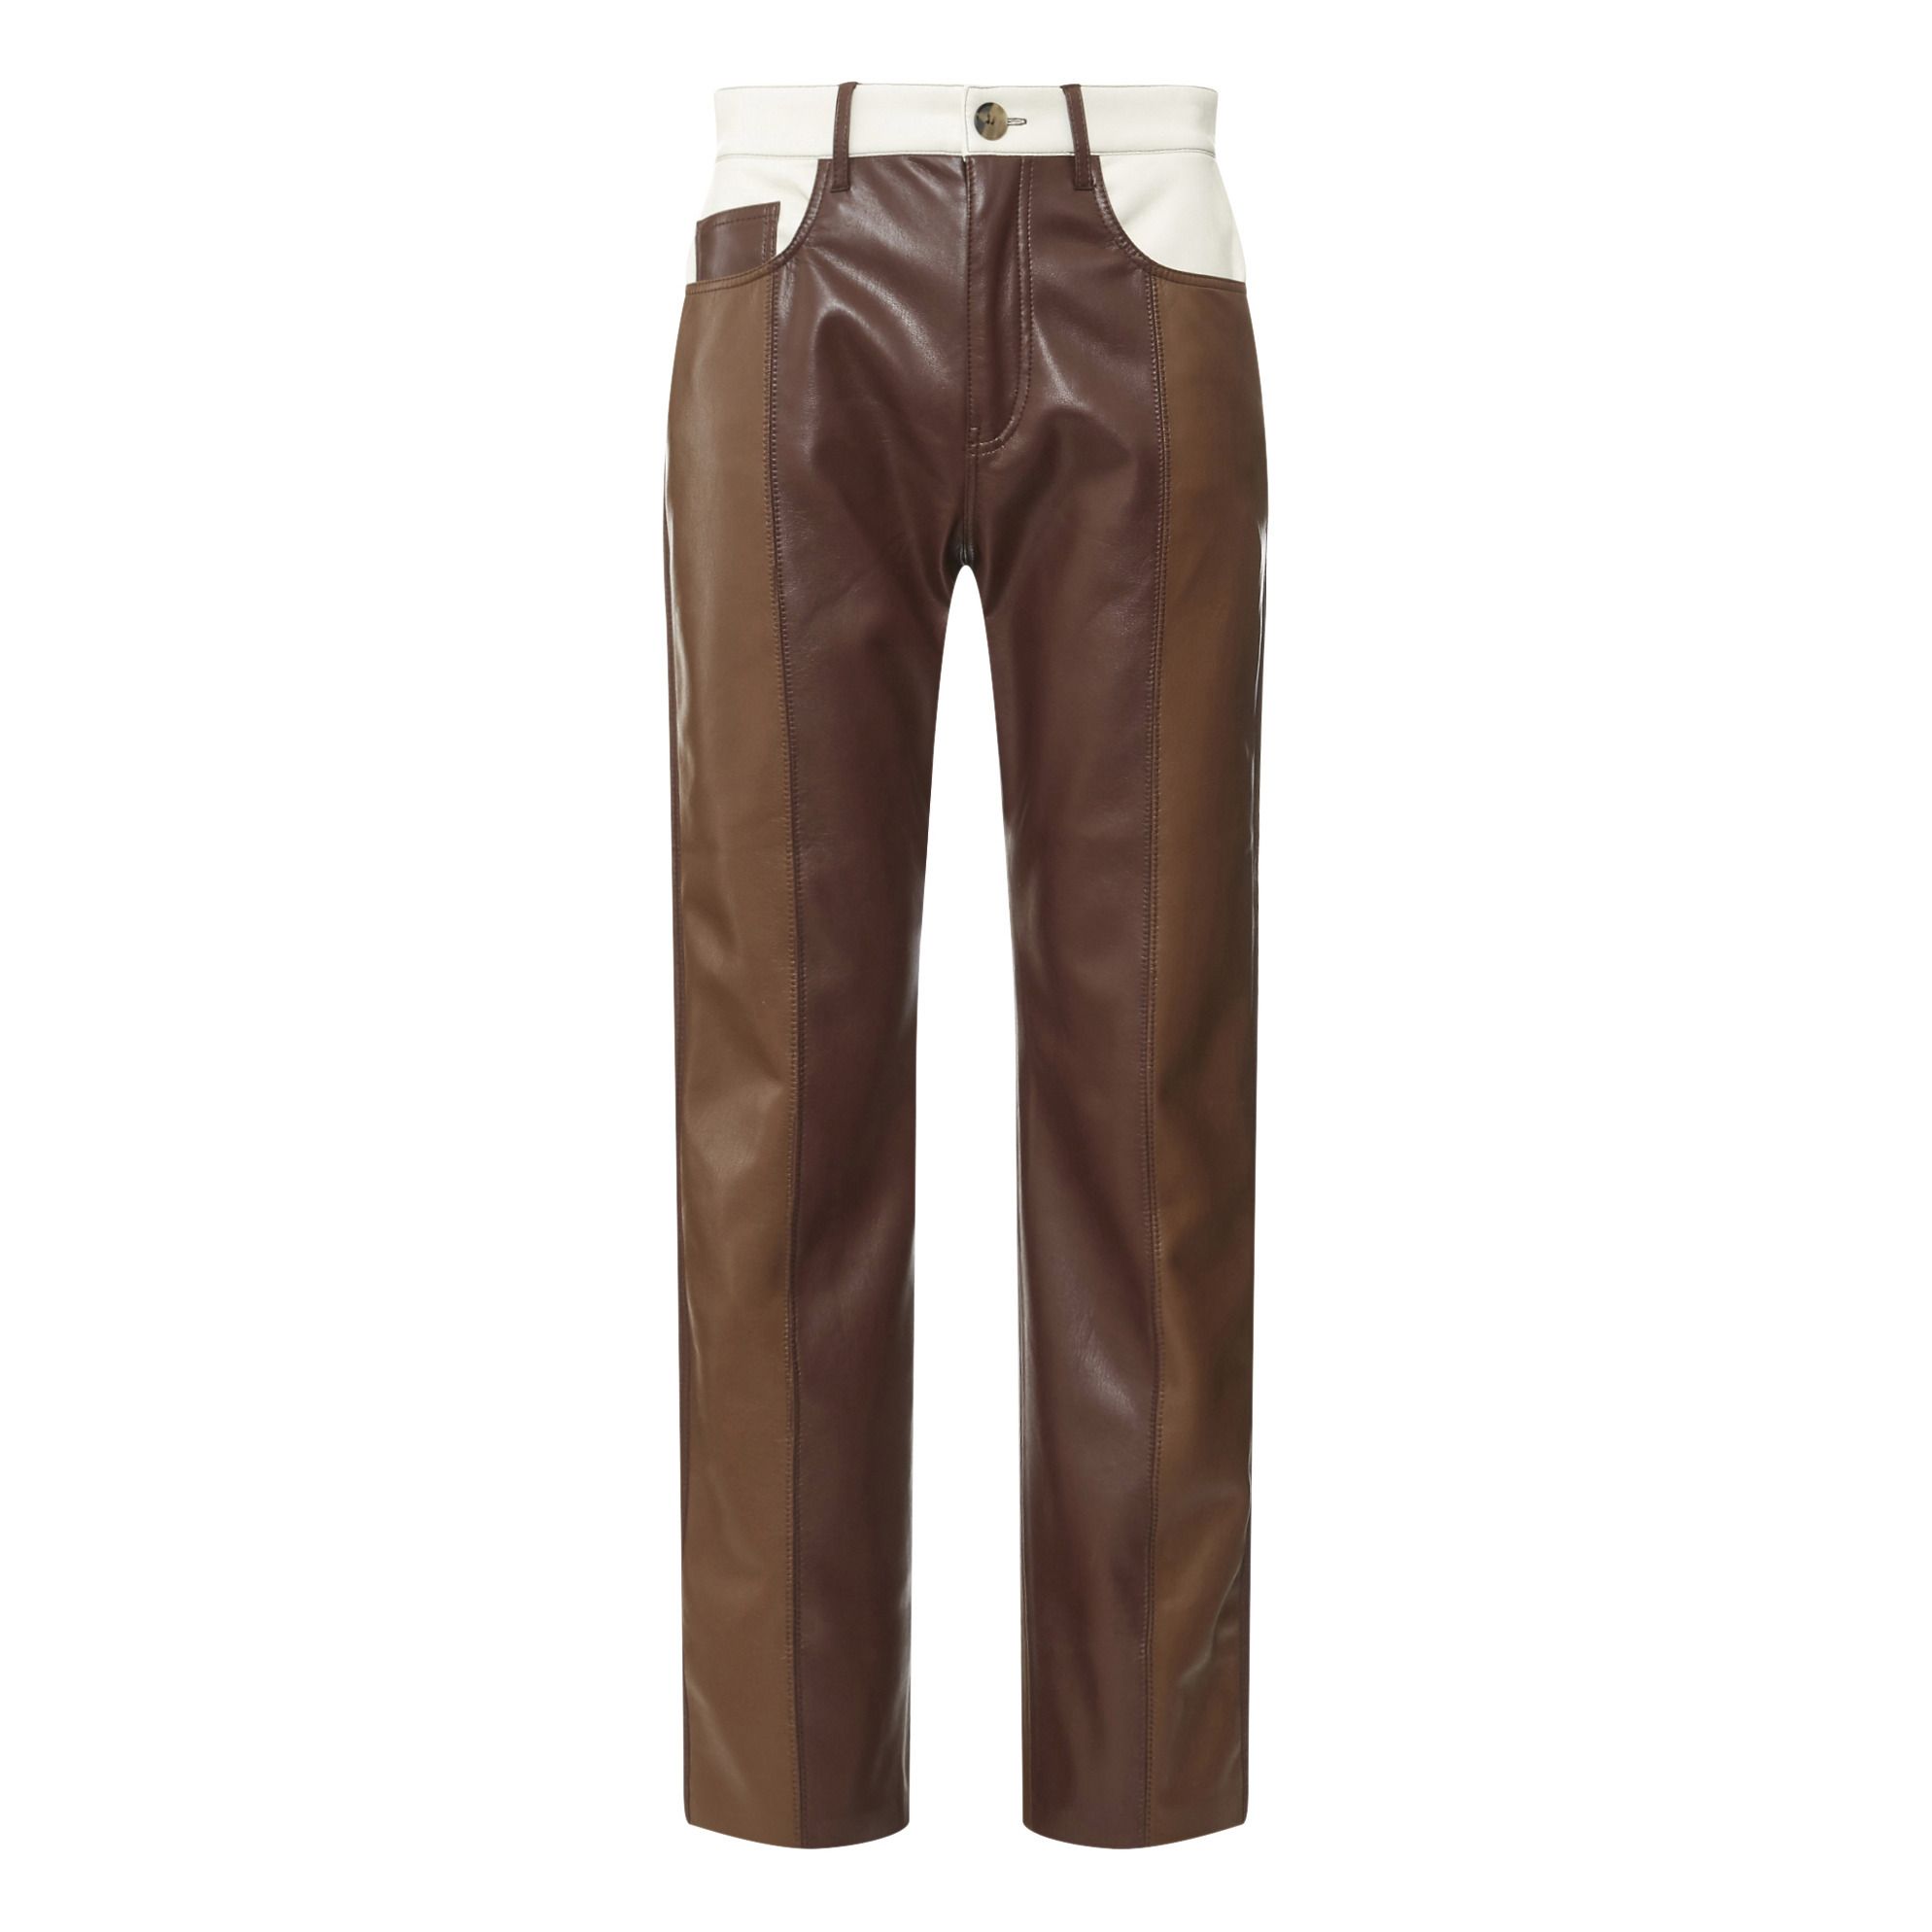 khaki leather trousers